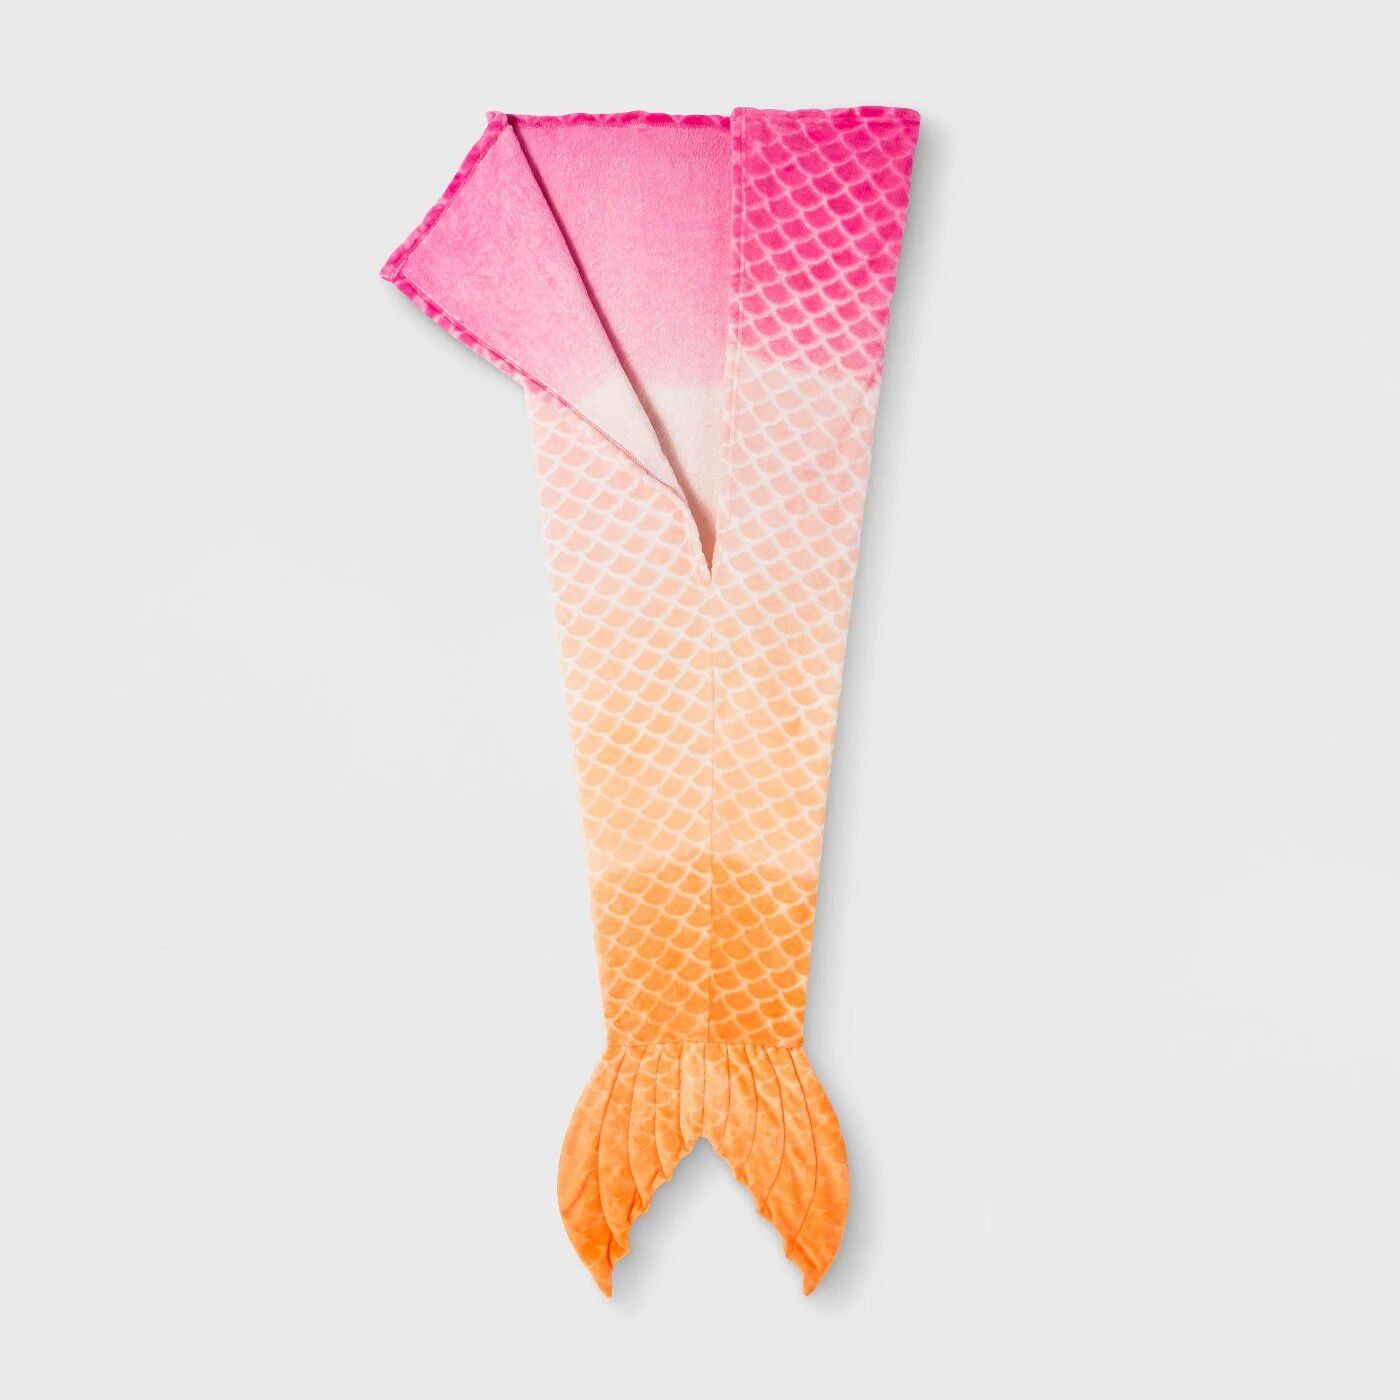 Mermaid Tail Blanket - Pillowfort